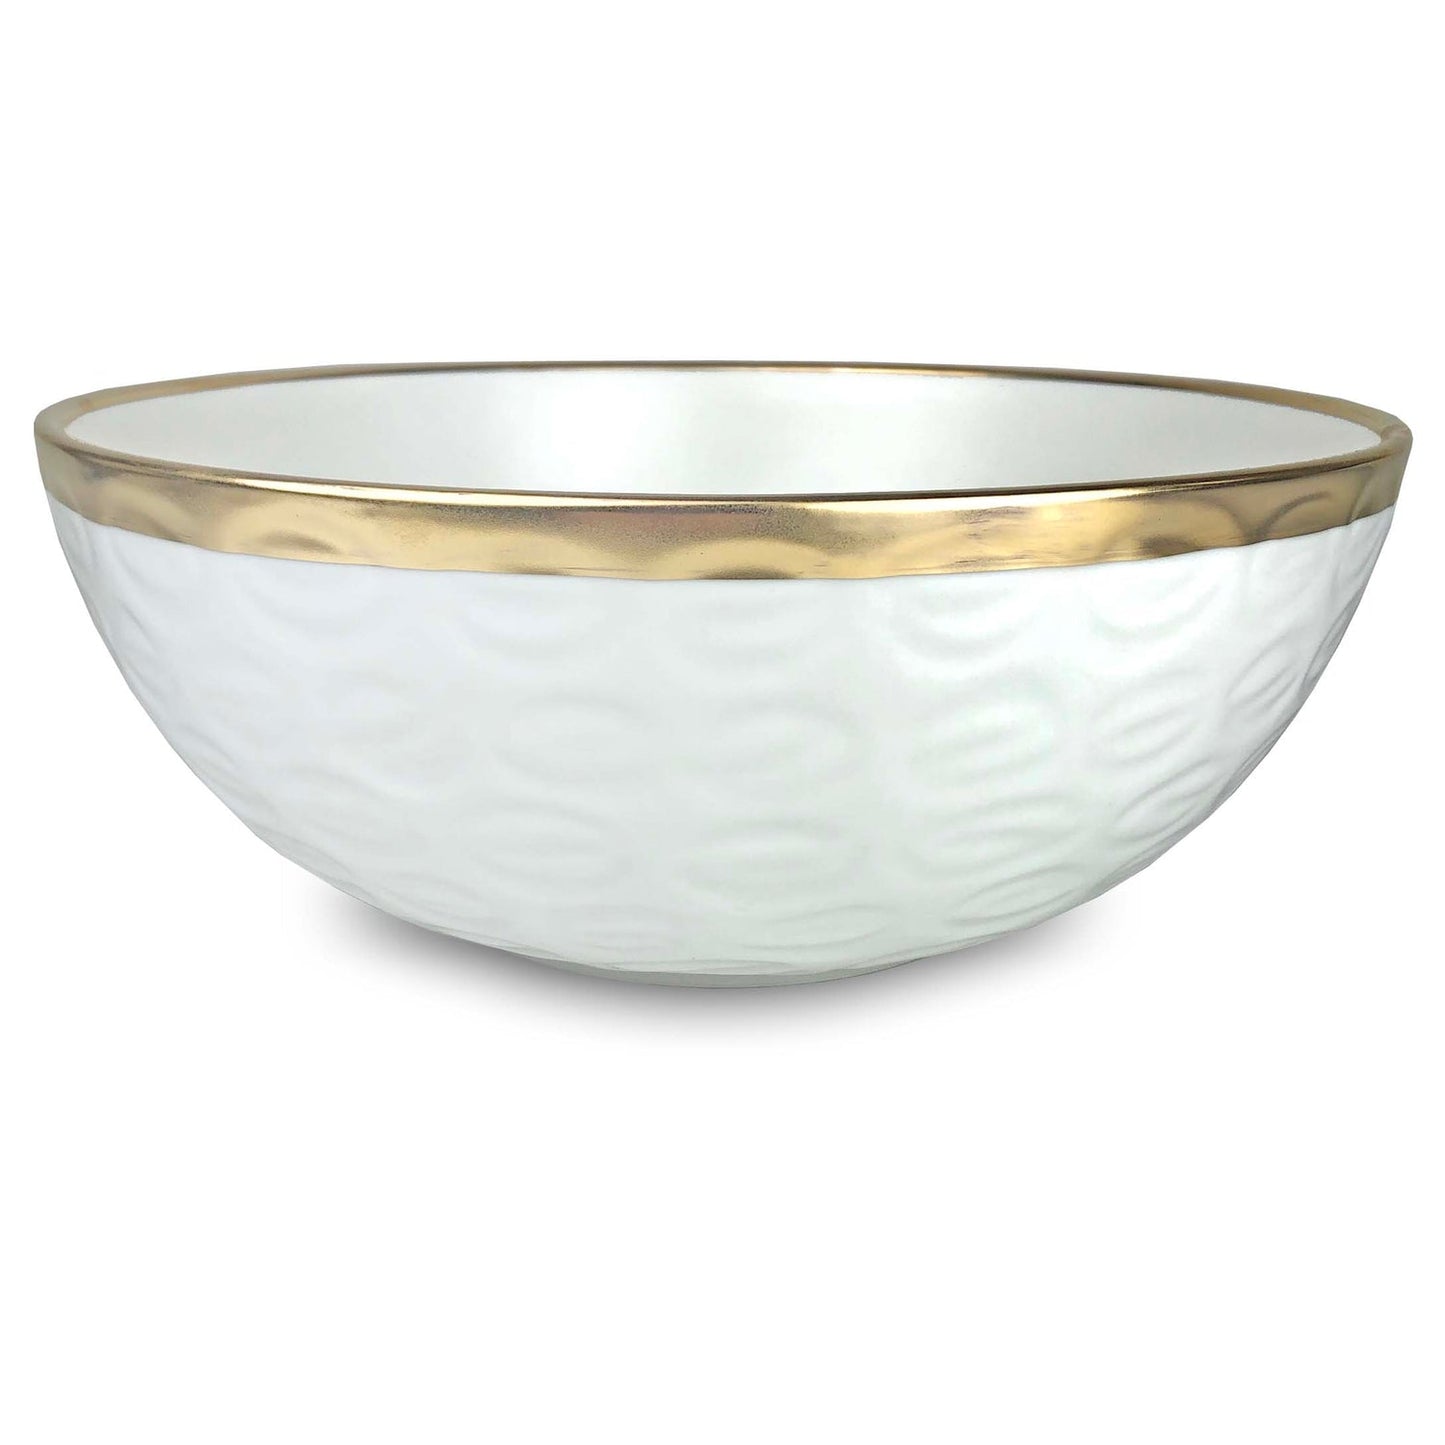 Truro Large Bowl - Gold